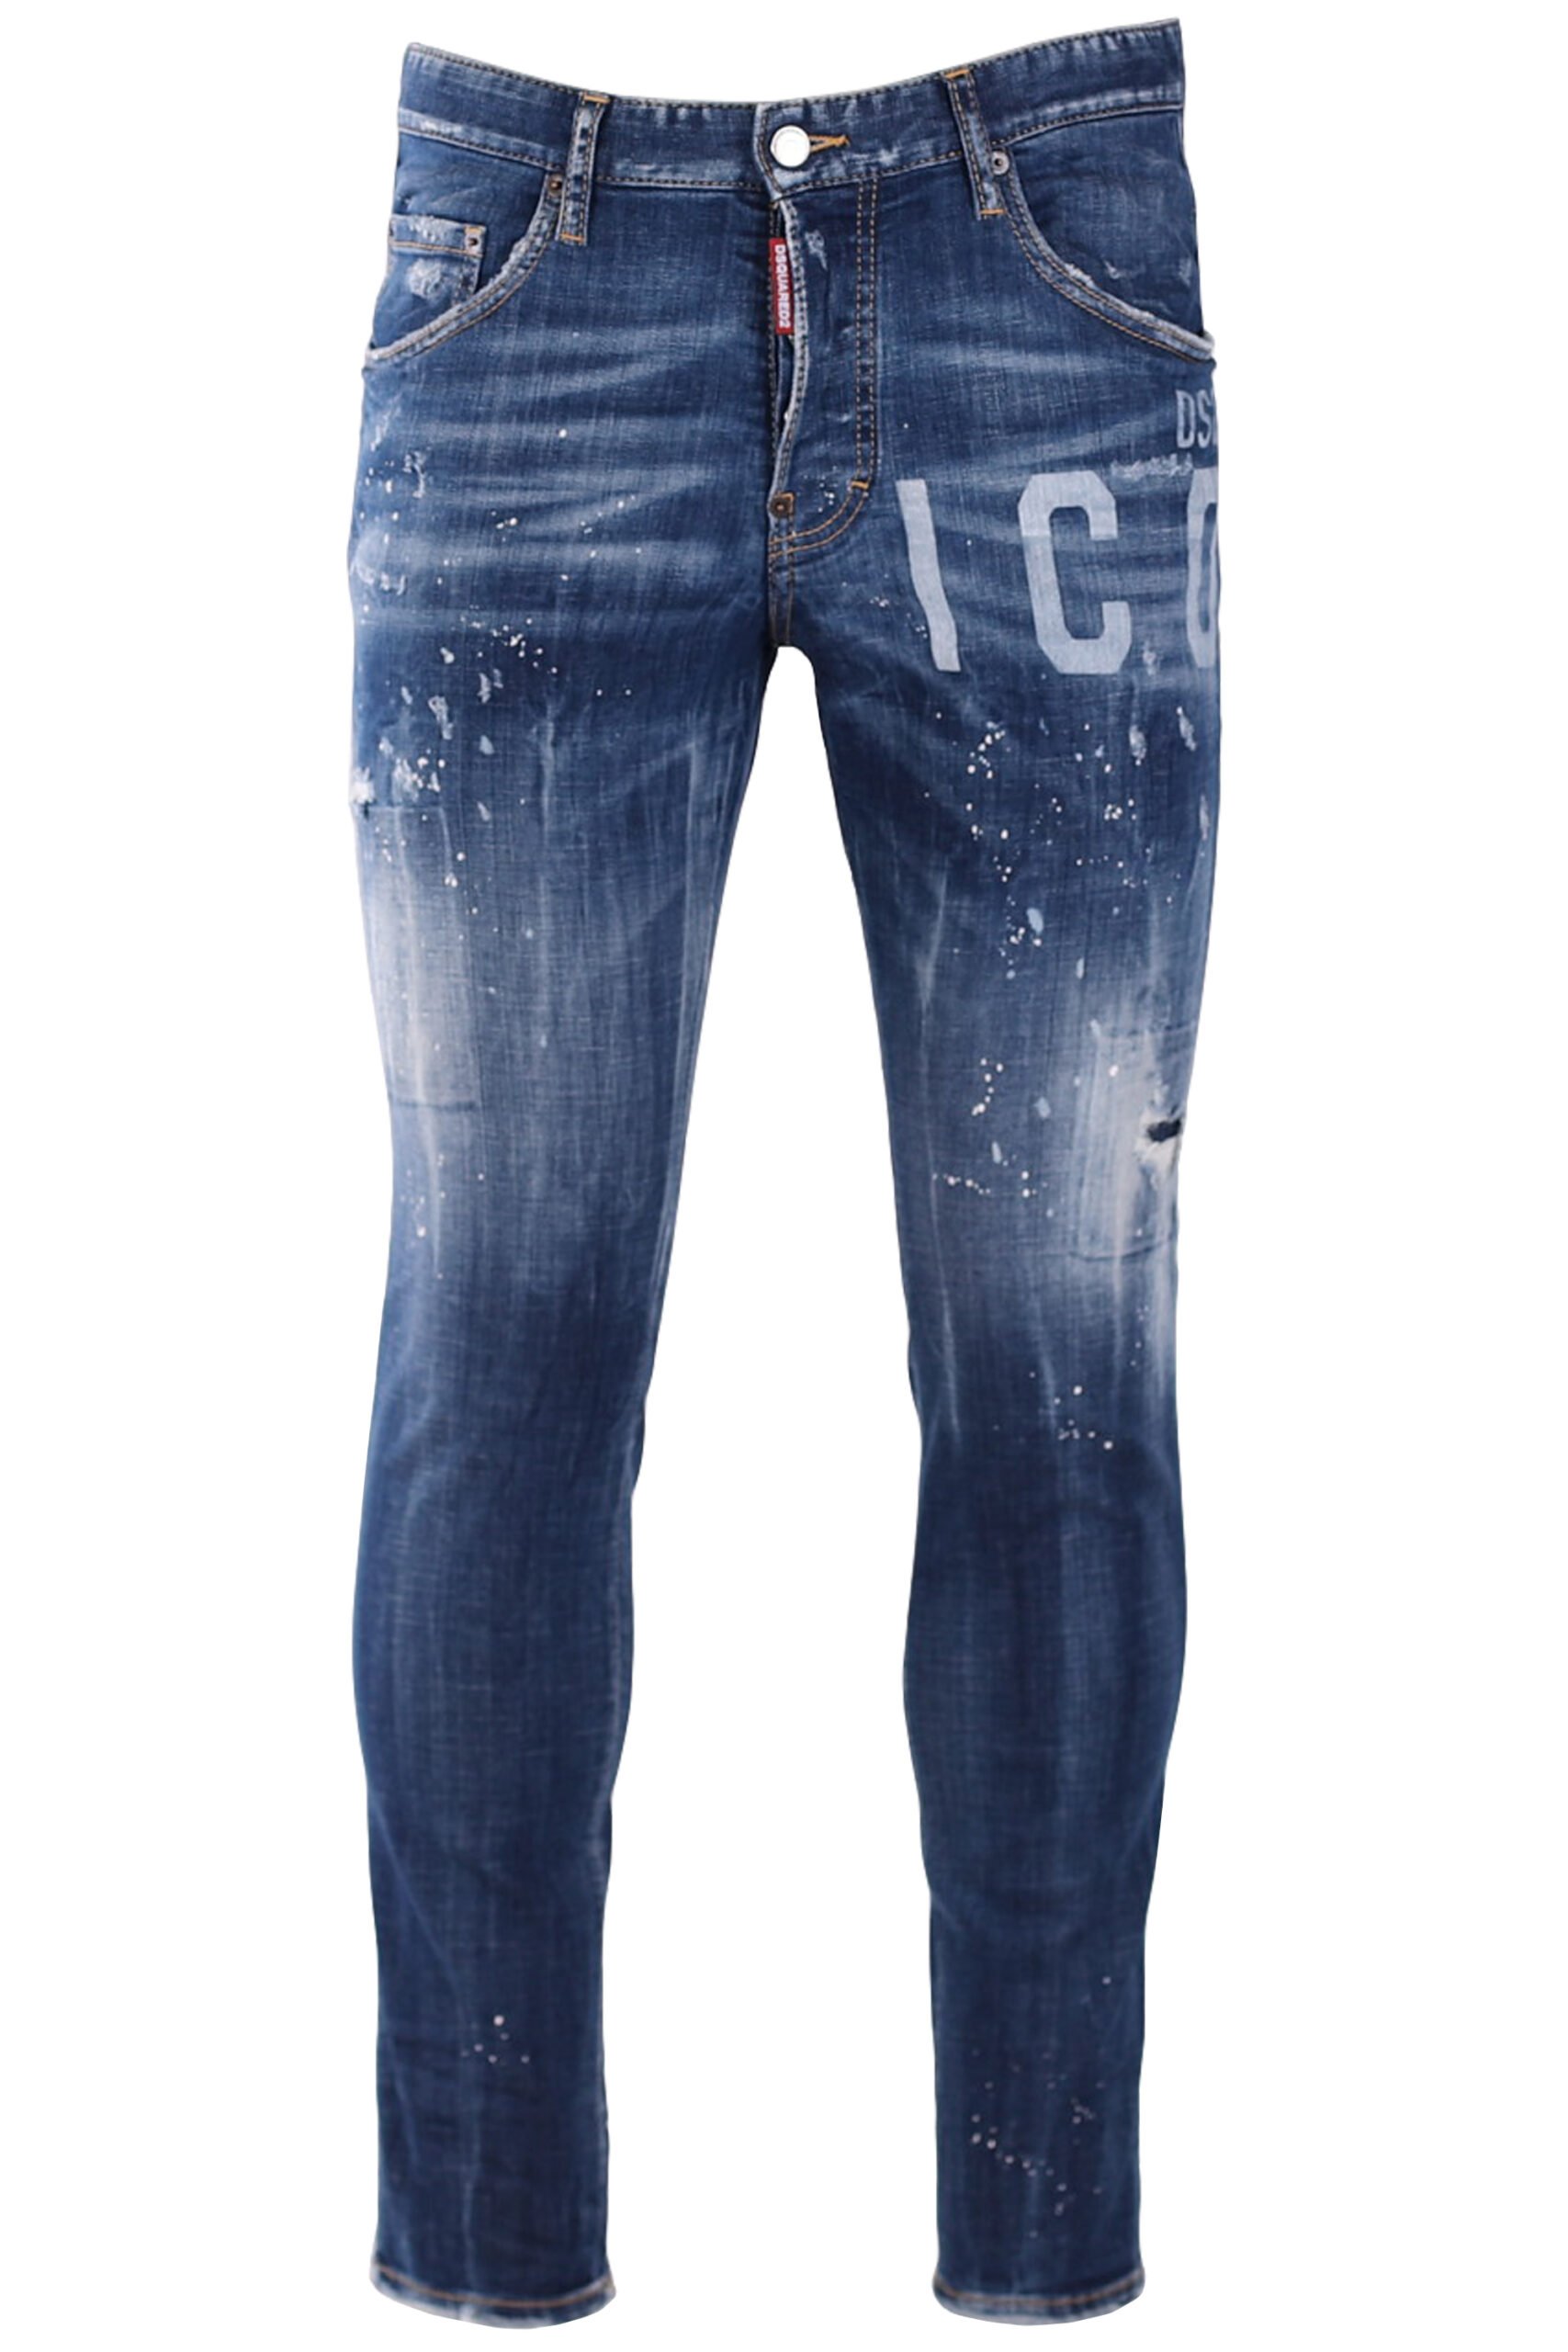 Dsquared2 - Pantalón vaquero azul "skater jean" con "icon" y pintura blanca - BLS Fashion